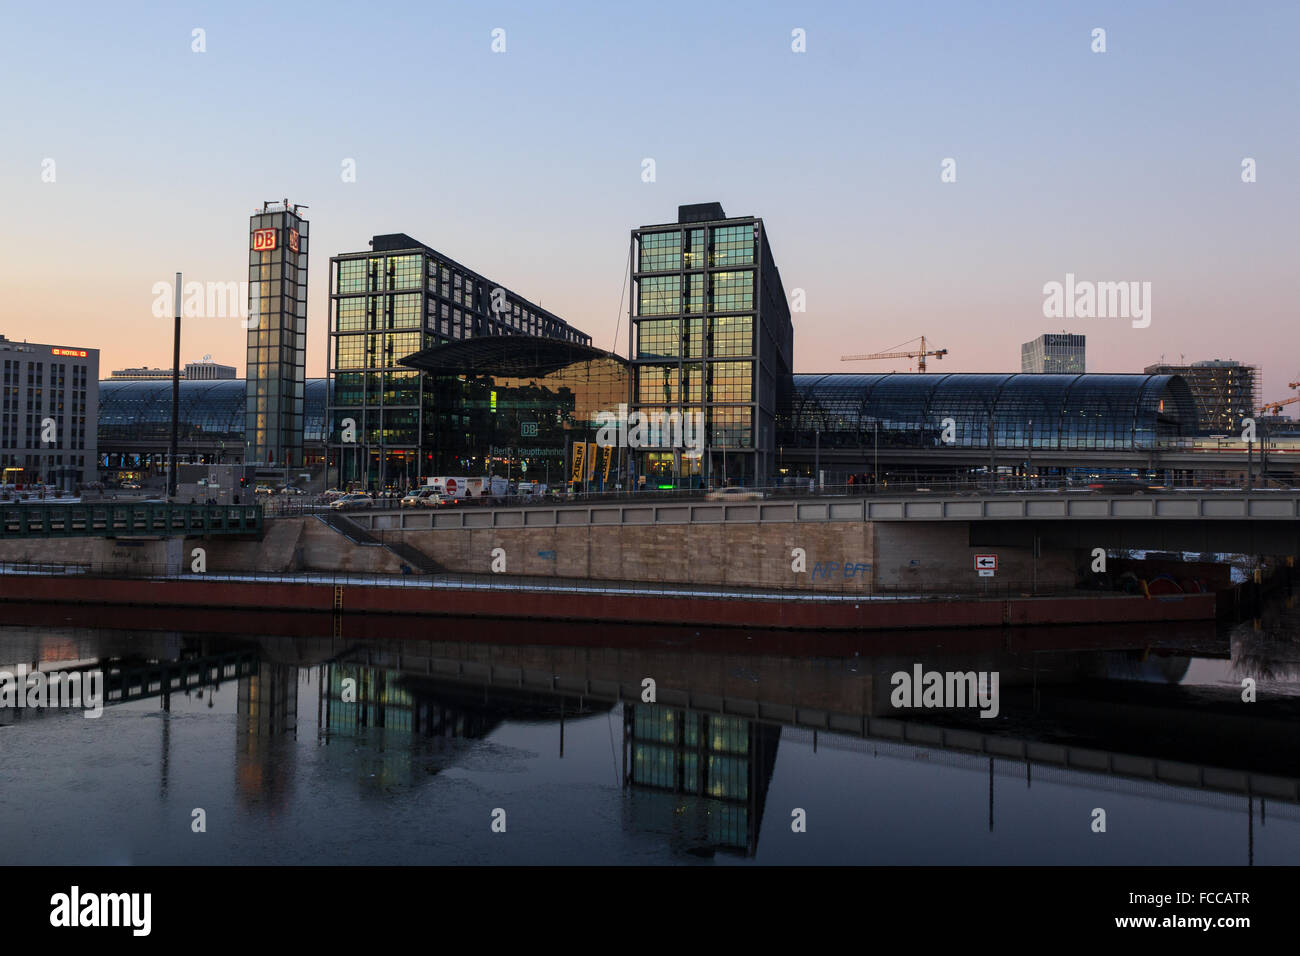 Berlin, 21. Januar 2015: Berliner Hauptbahnhof (Hauptbahnhof) die größte und Bahnhof Europas. Stockfoto